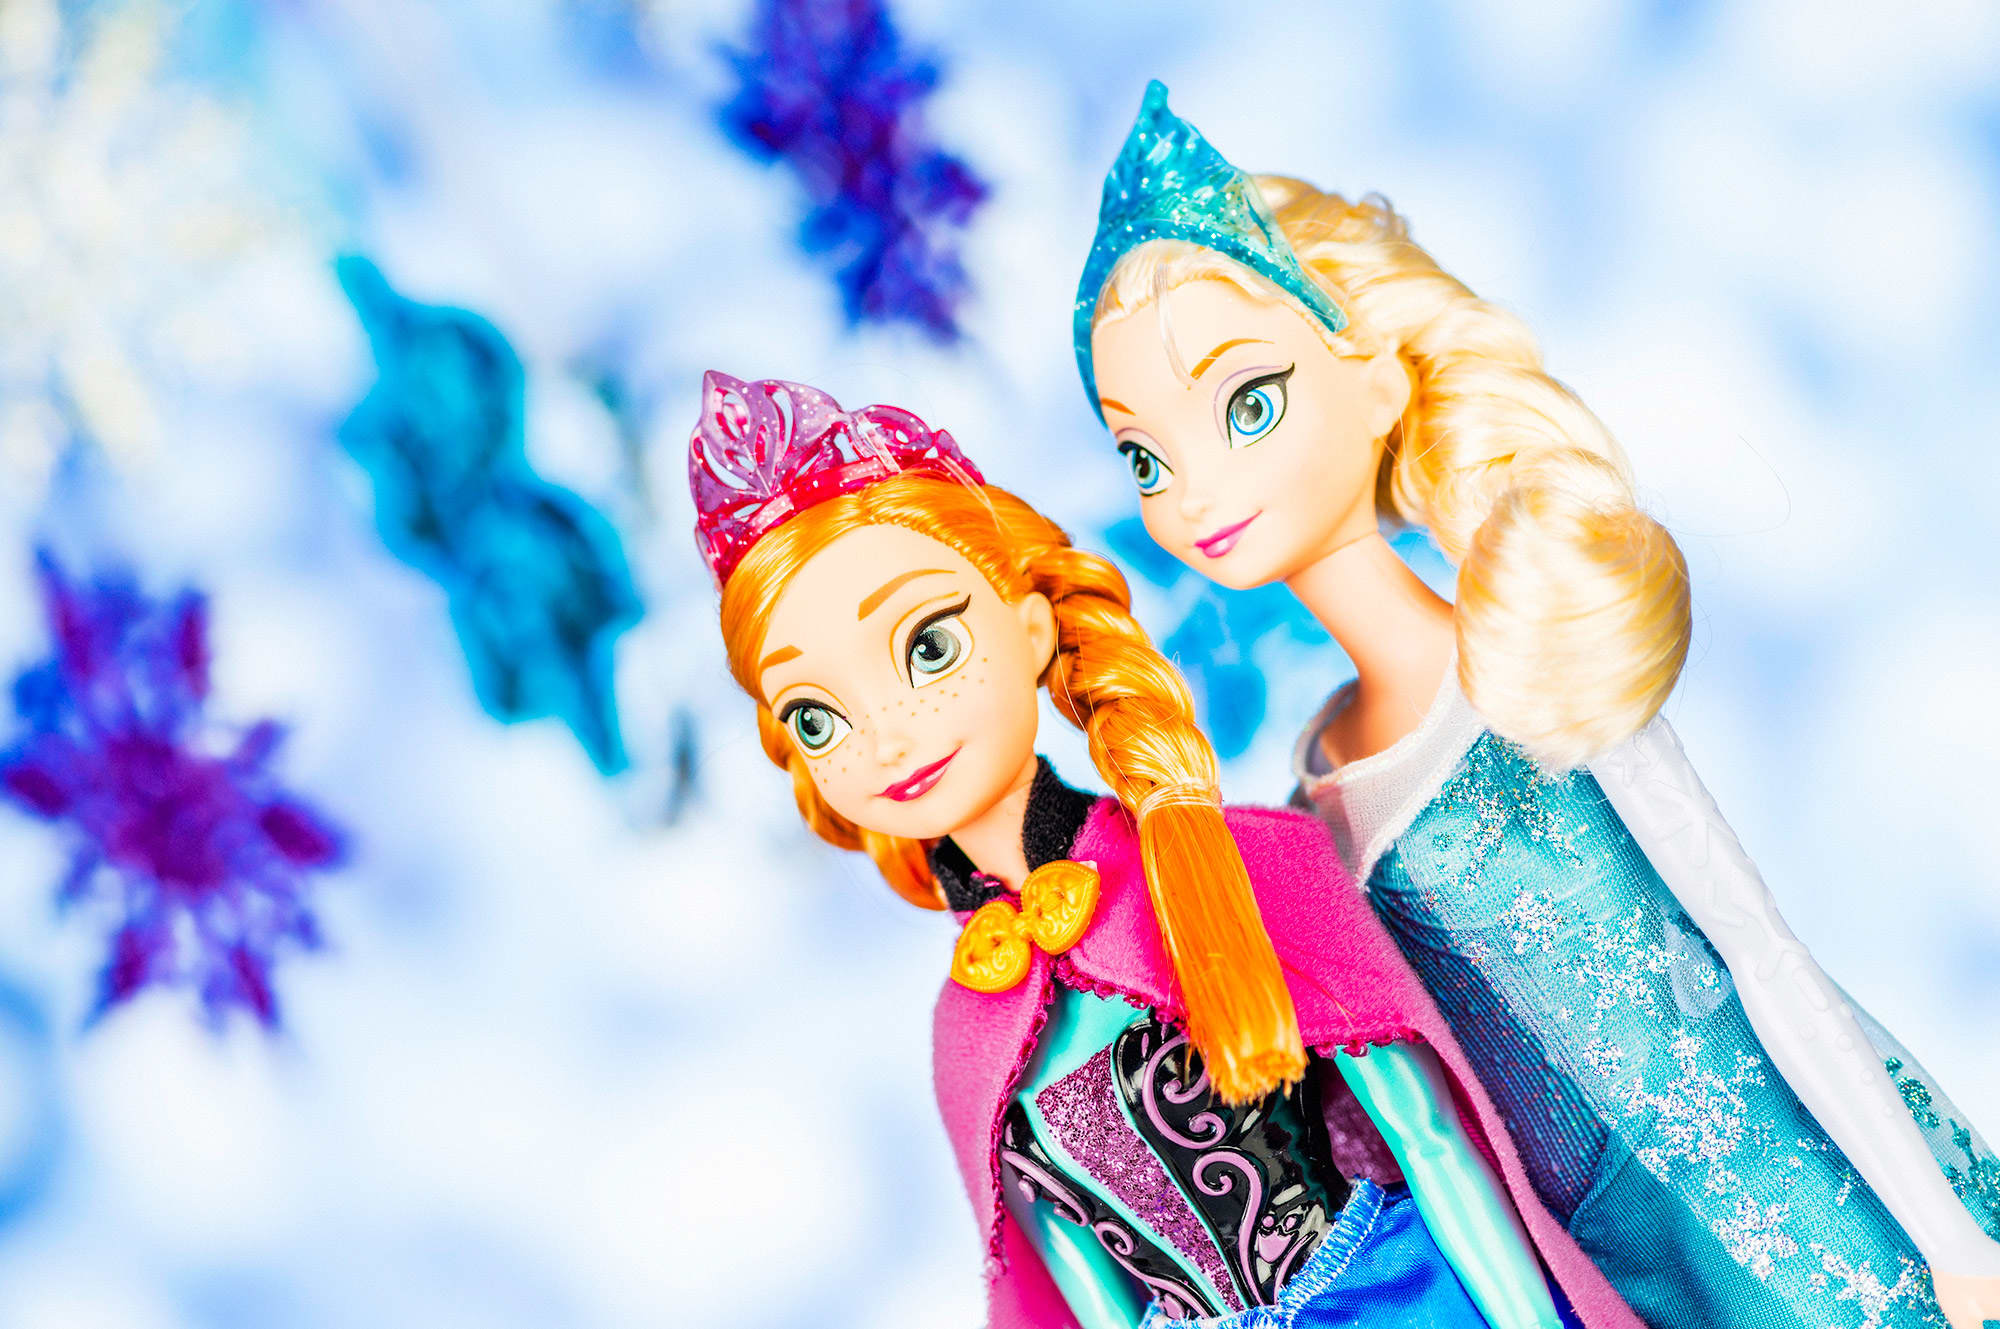 Mattel recoups the Disney princess license, while Hasbro hangs on to Star Wars